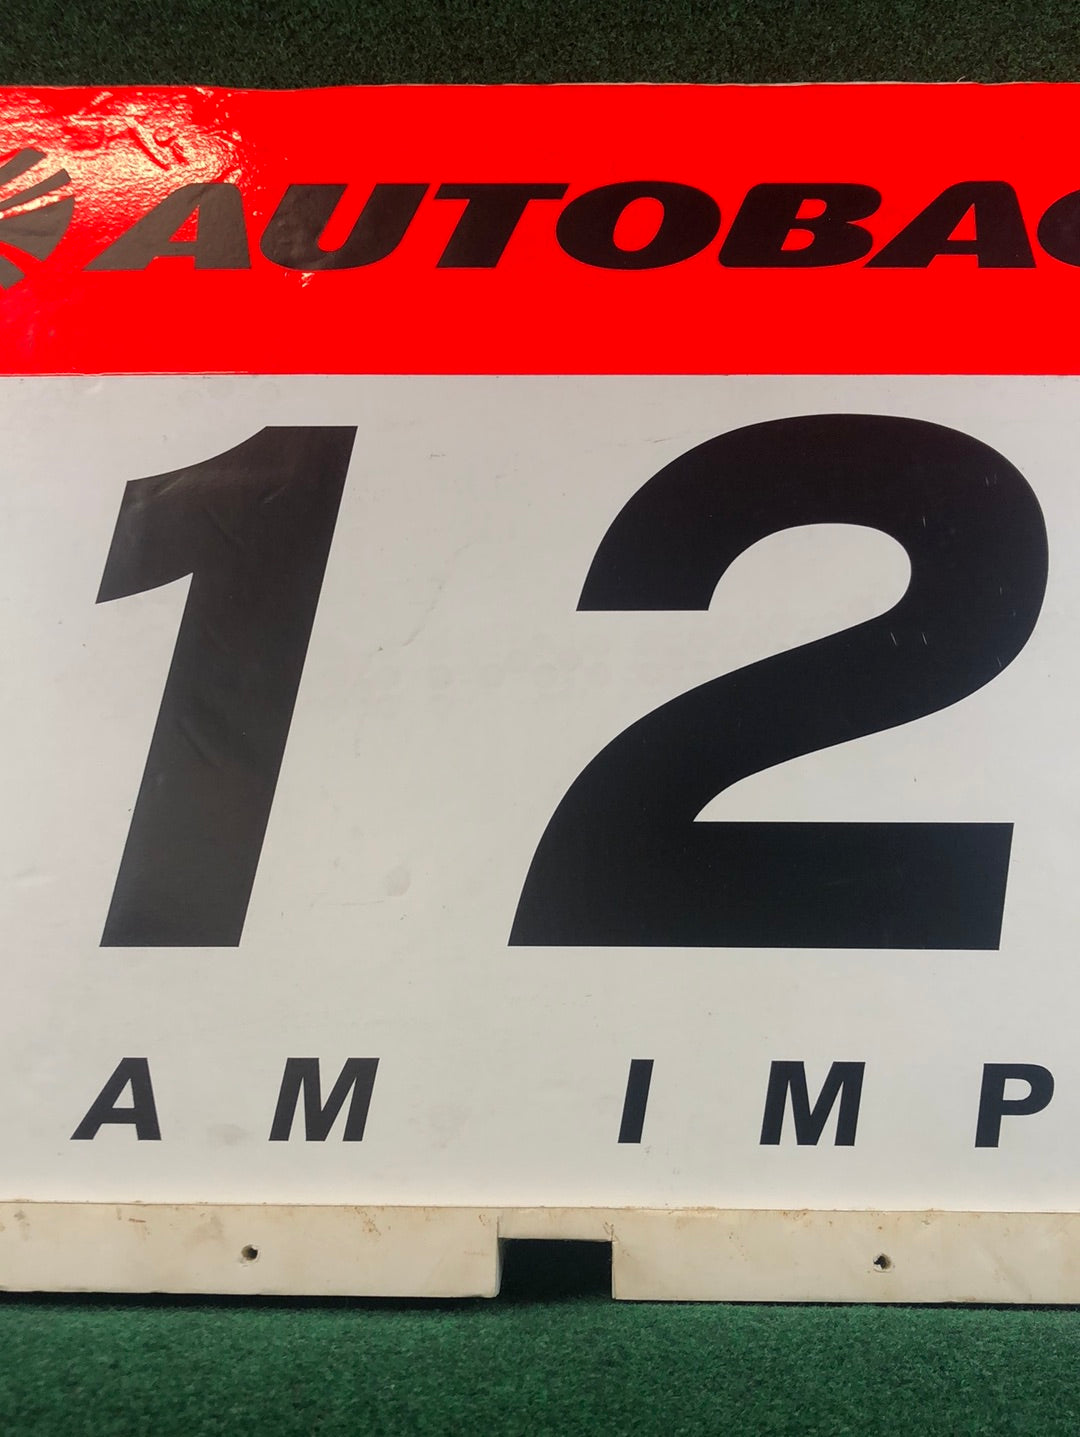 Autobacs Super GT Team IMPUL Calsonic Nissan GTR Tsugio Matsuda & Sébastien Philippe Autographed Race Pit Board Poster Sign